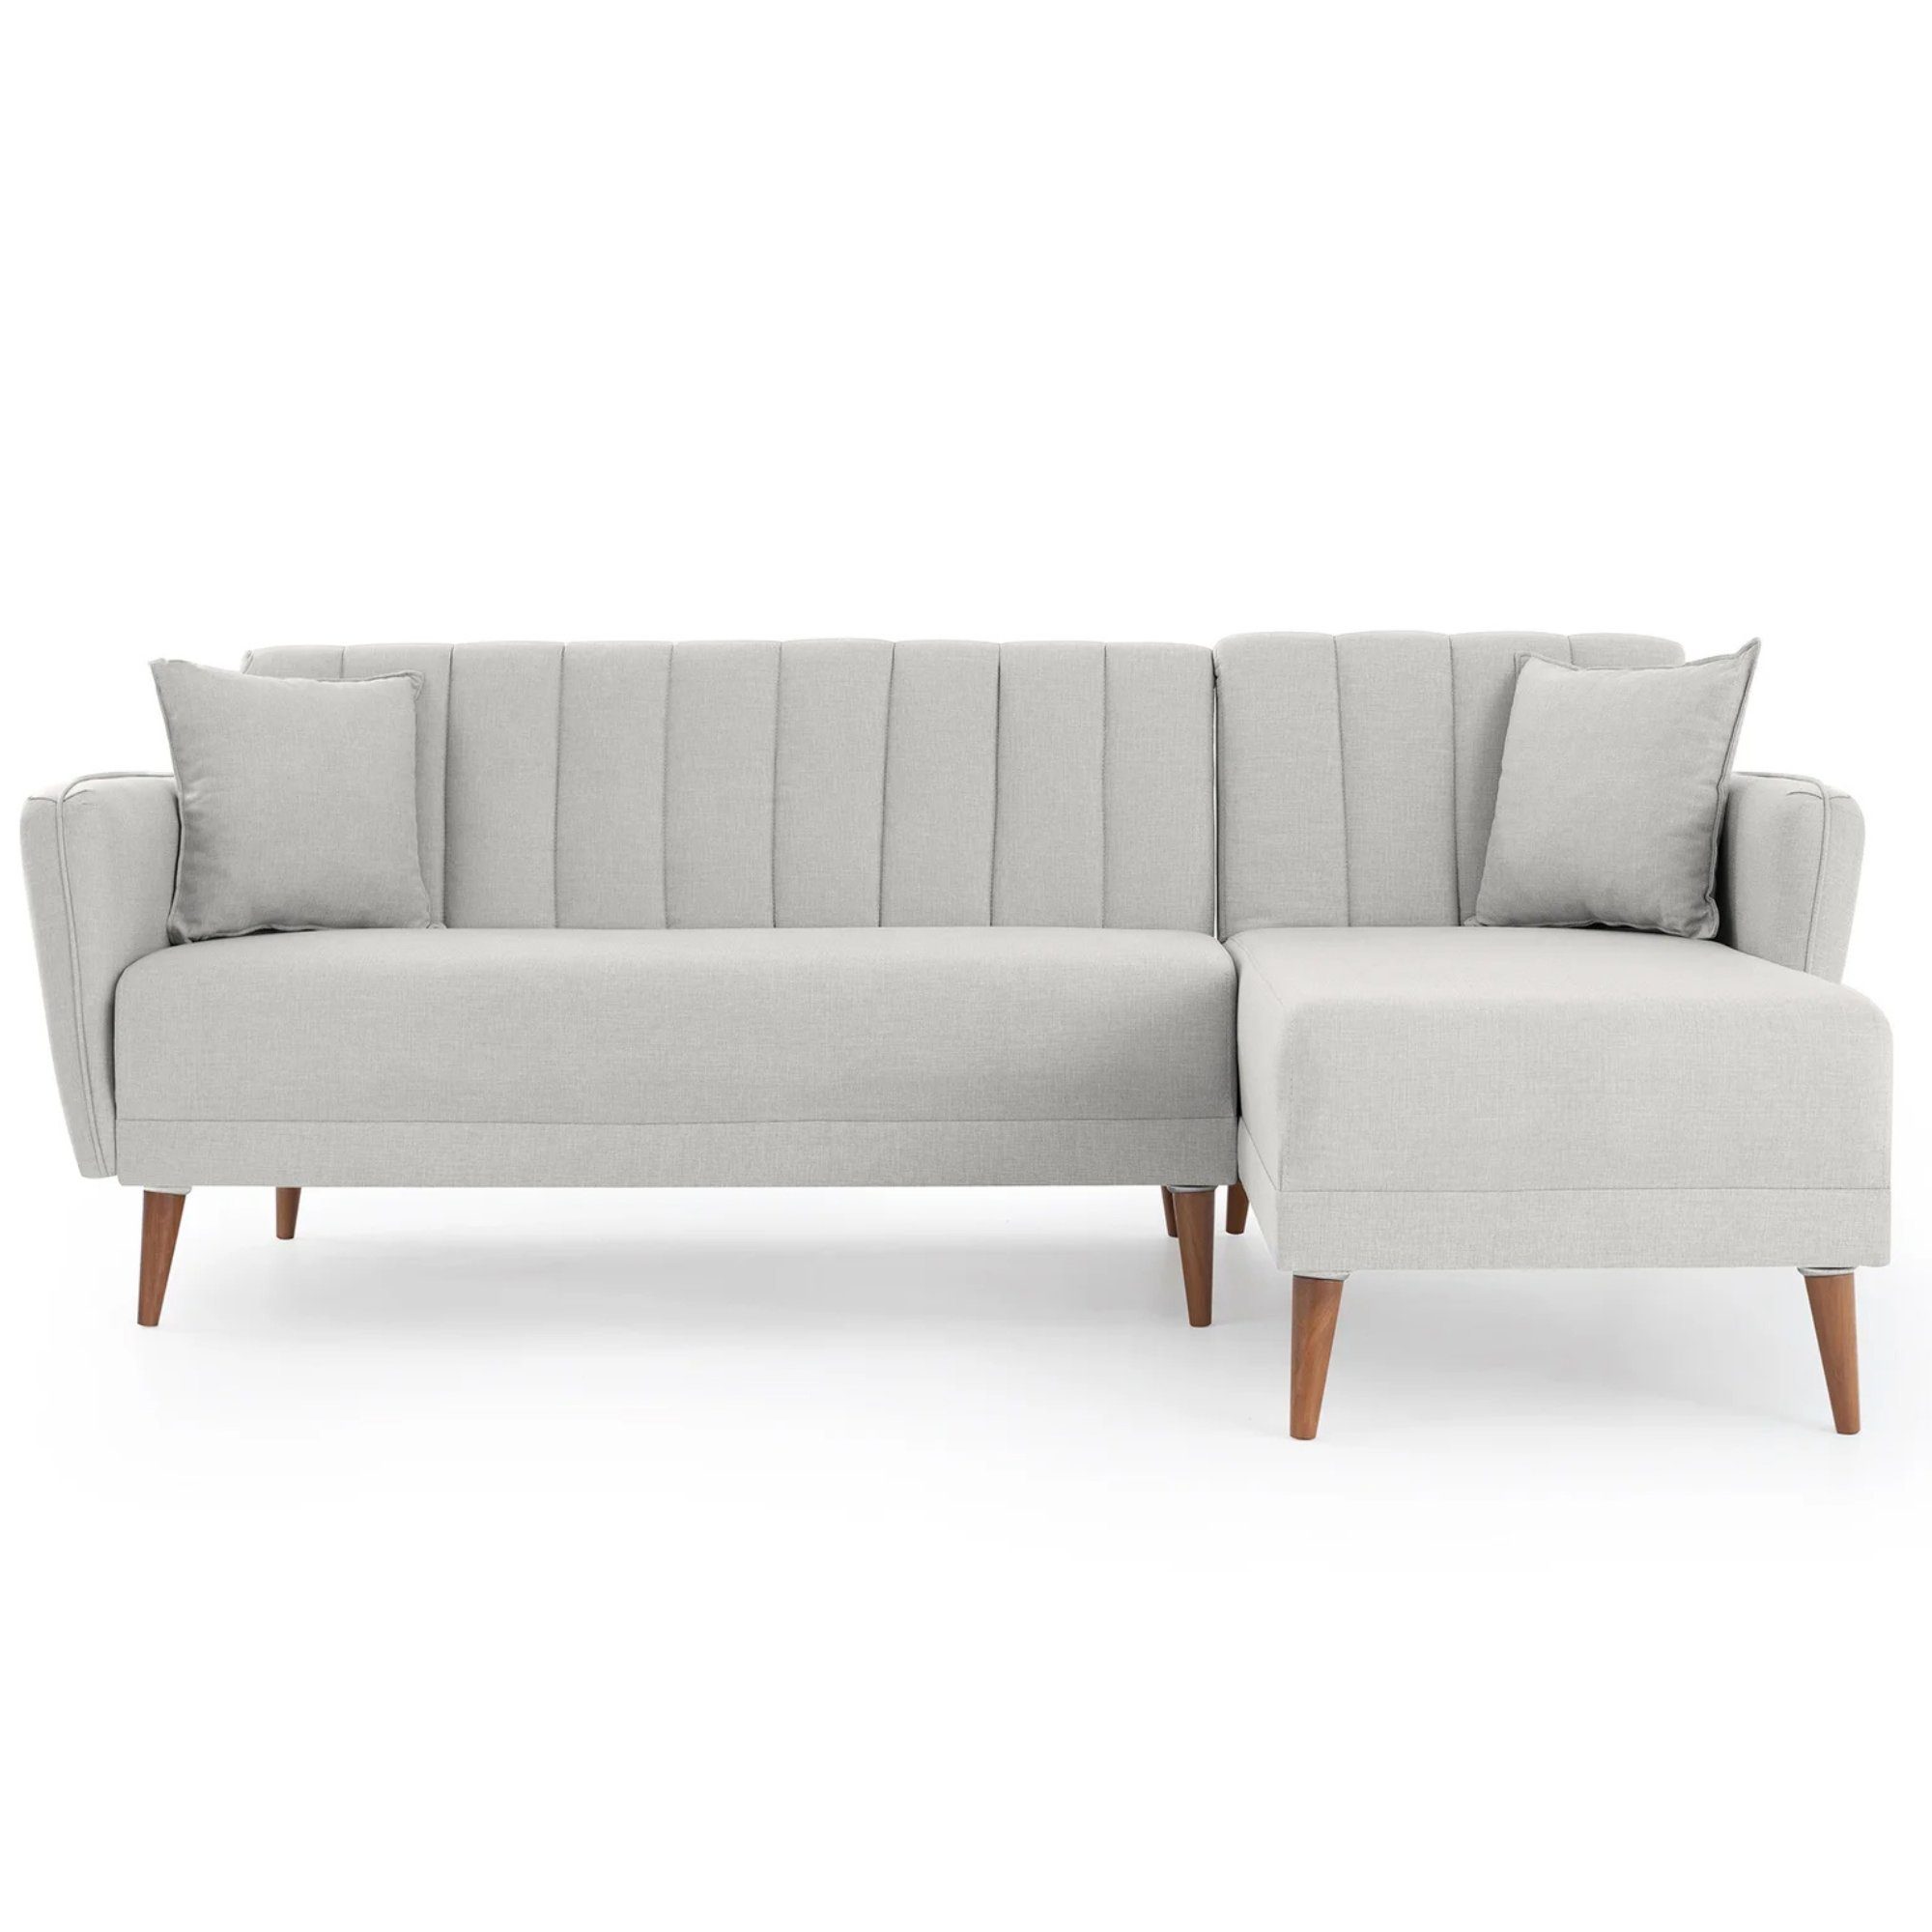 Gozos Ecksofa Gozos Mammo Sitzgruppe Ecksofa, Bettfunktion Couch, 225 x 150 x 85 cm, mit Relaxfunktion Creme